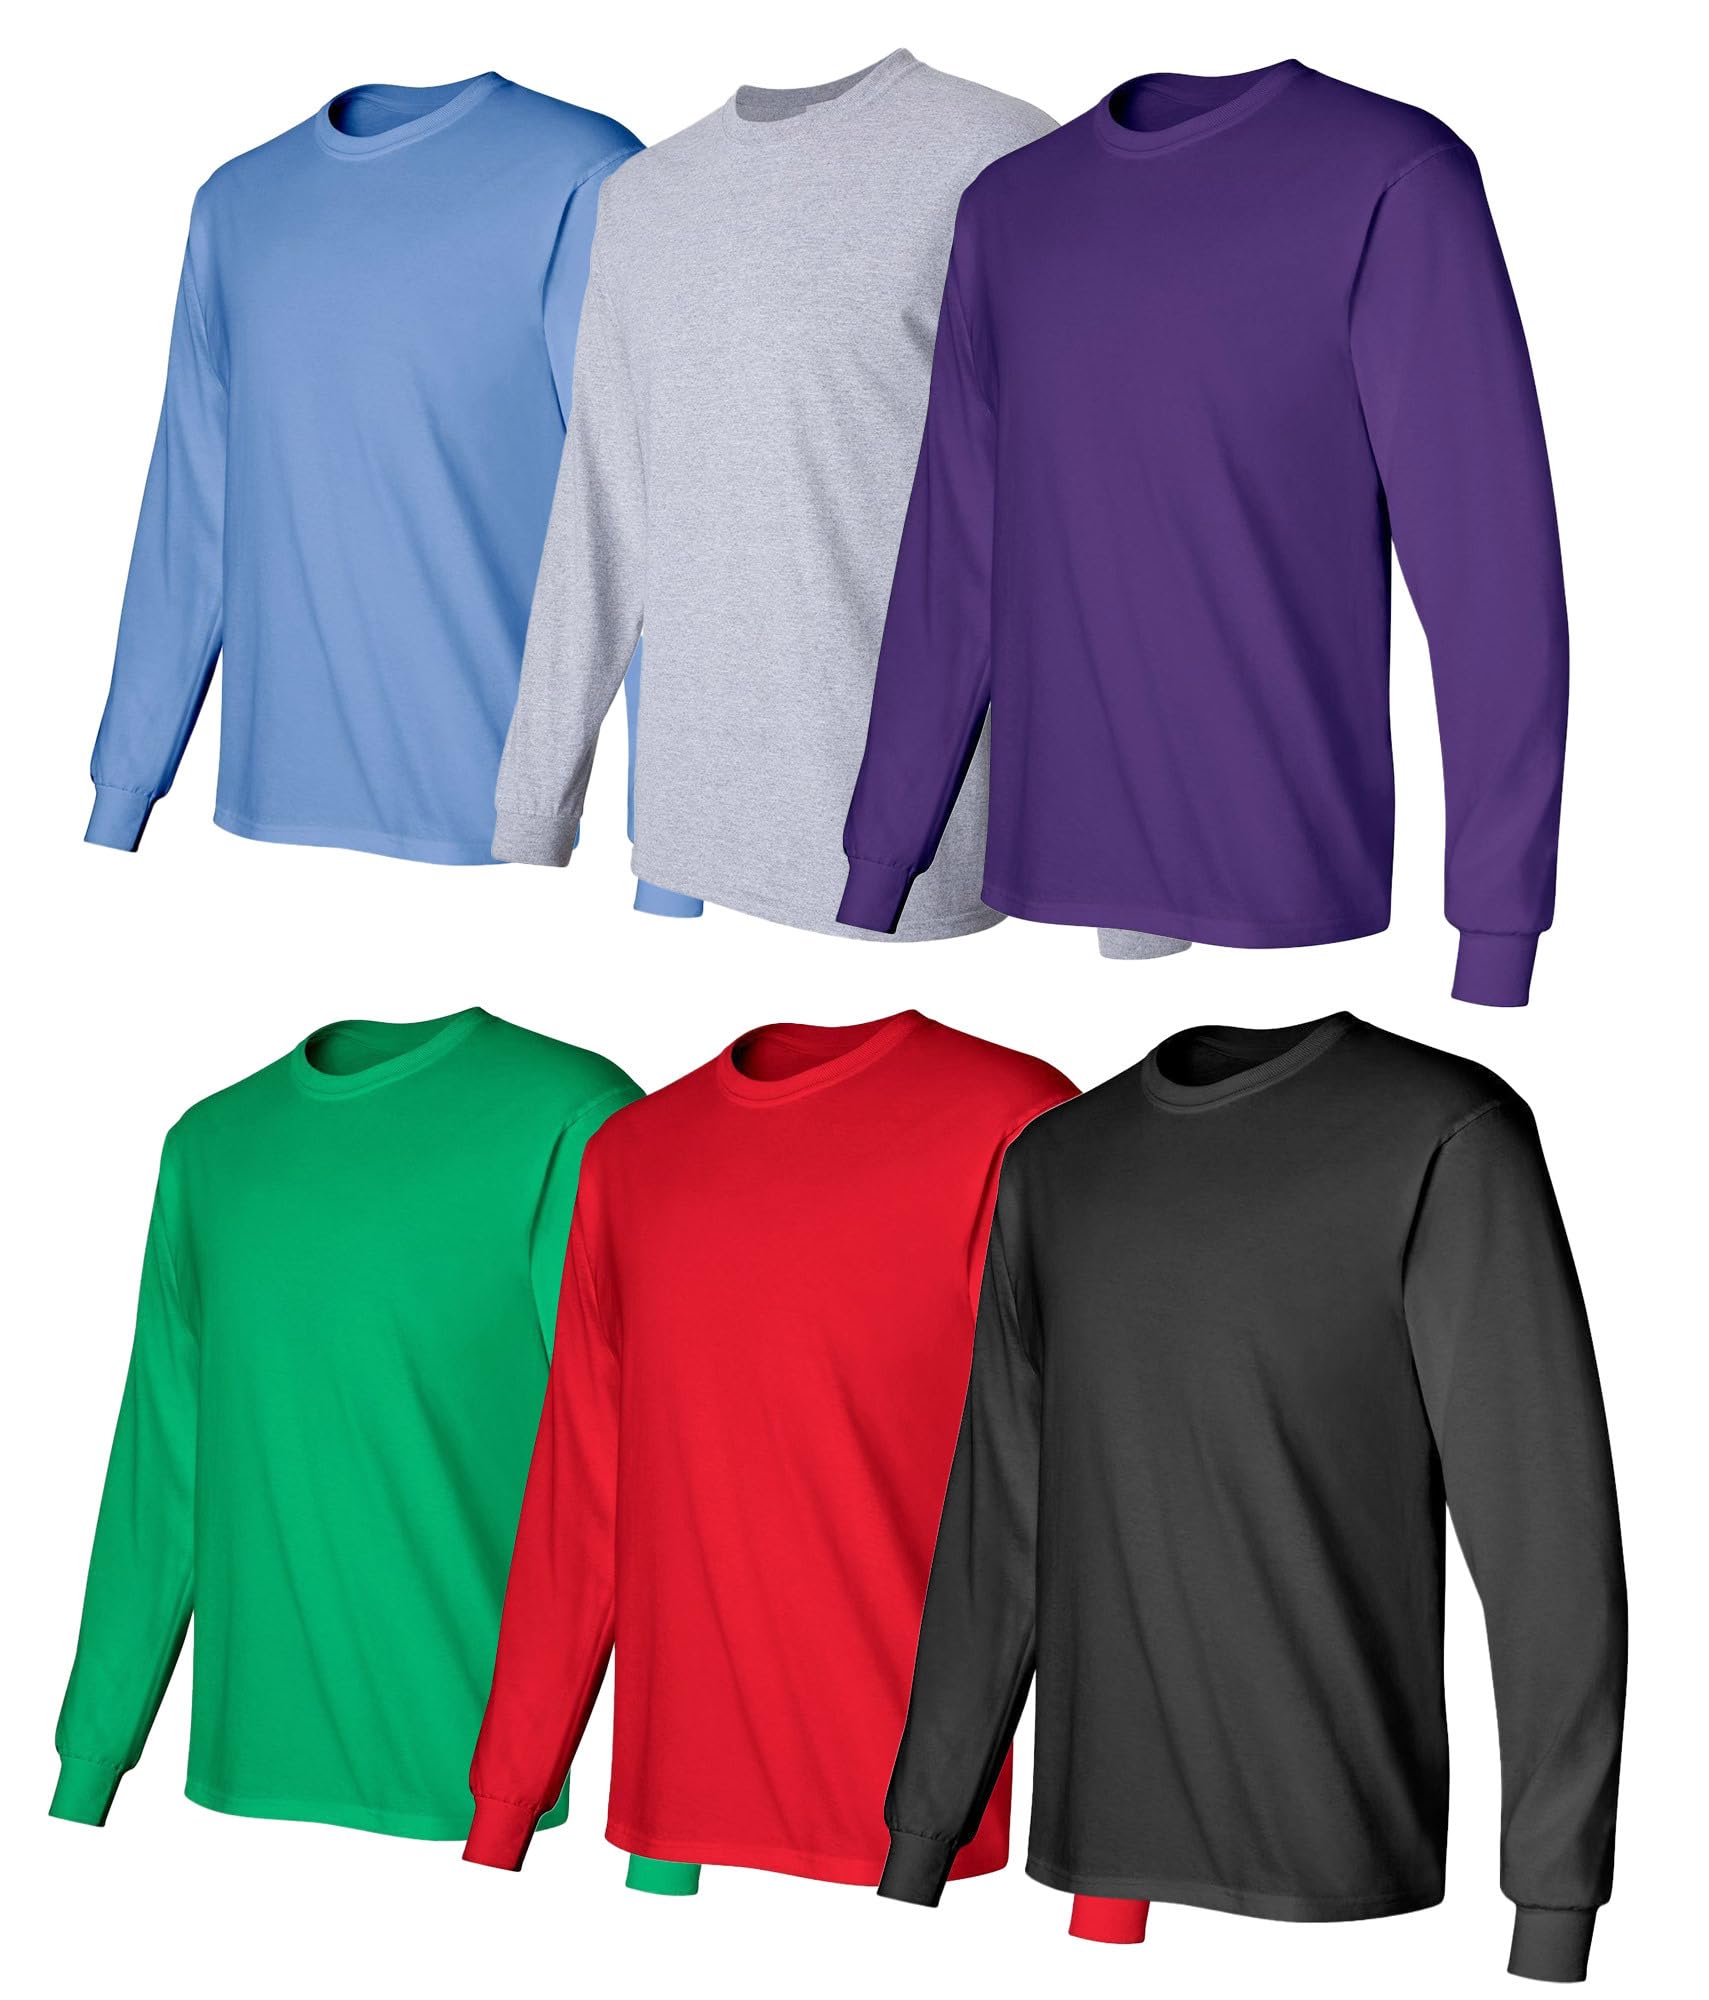 BILLIONHATS 6 Pack Mens Long Sleeve Colorful T-Shirts, 100% Cotton - Crew Neck Bulk Tees for Men, Wholesale Sleeved Tshirt Packs